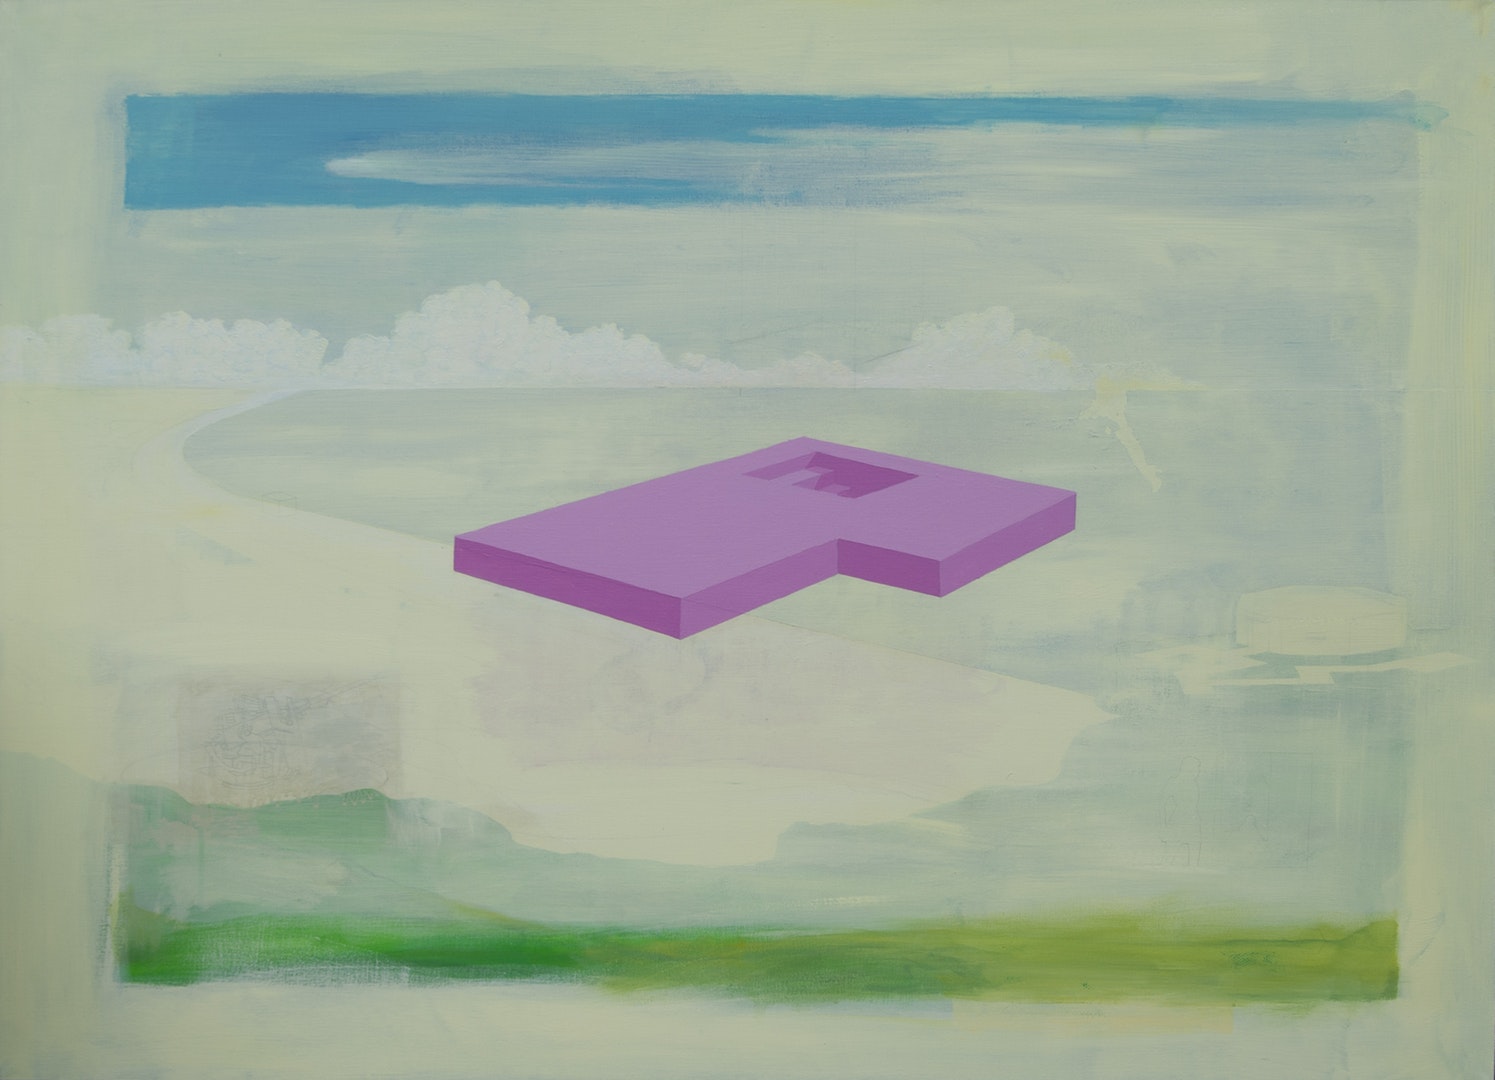 'Component', Gary Scholes, Acrylic on canvas, 92 x 127 x 4 cm